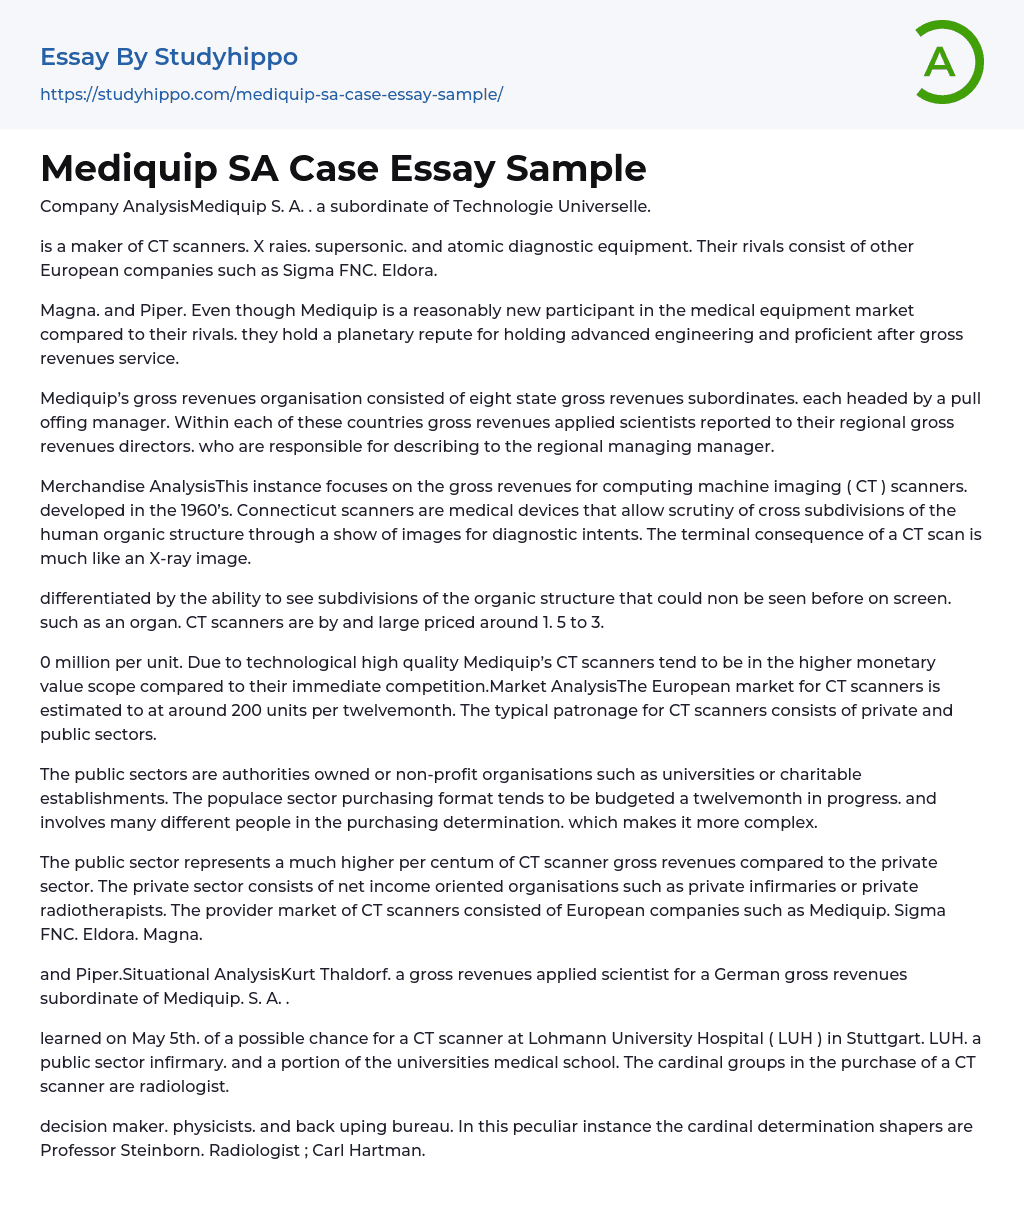 Mediquip SA Case Essay Sample